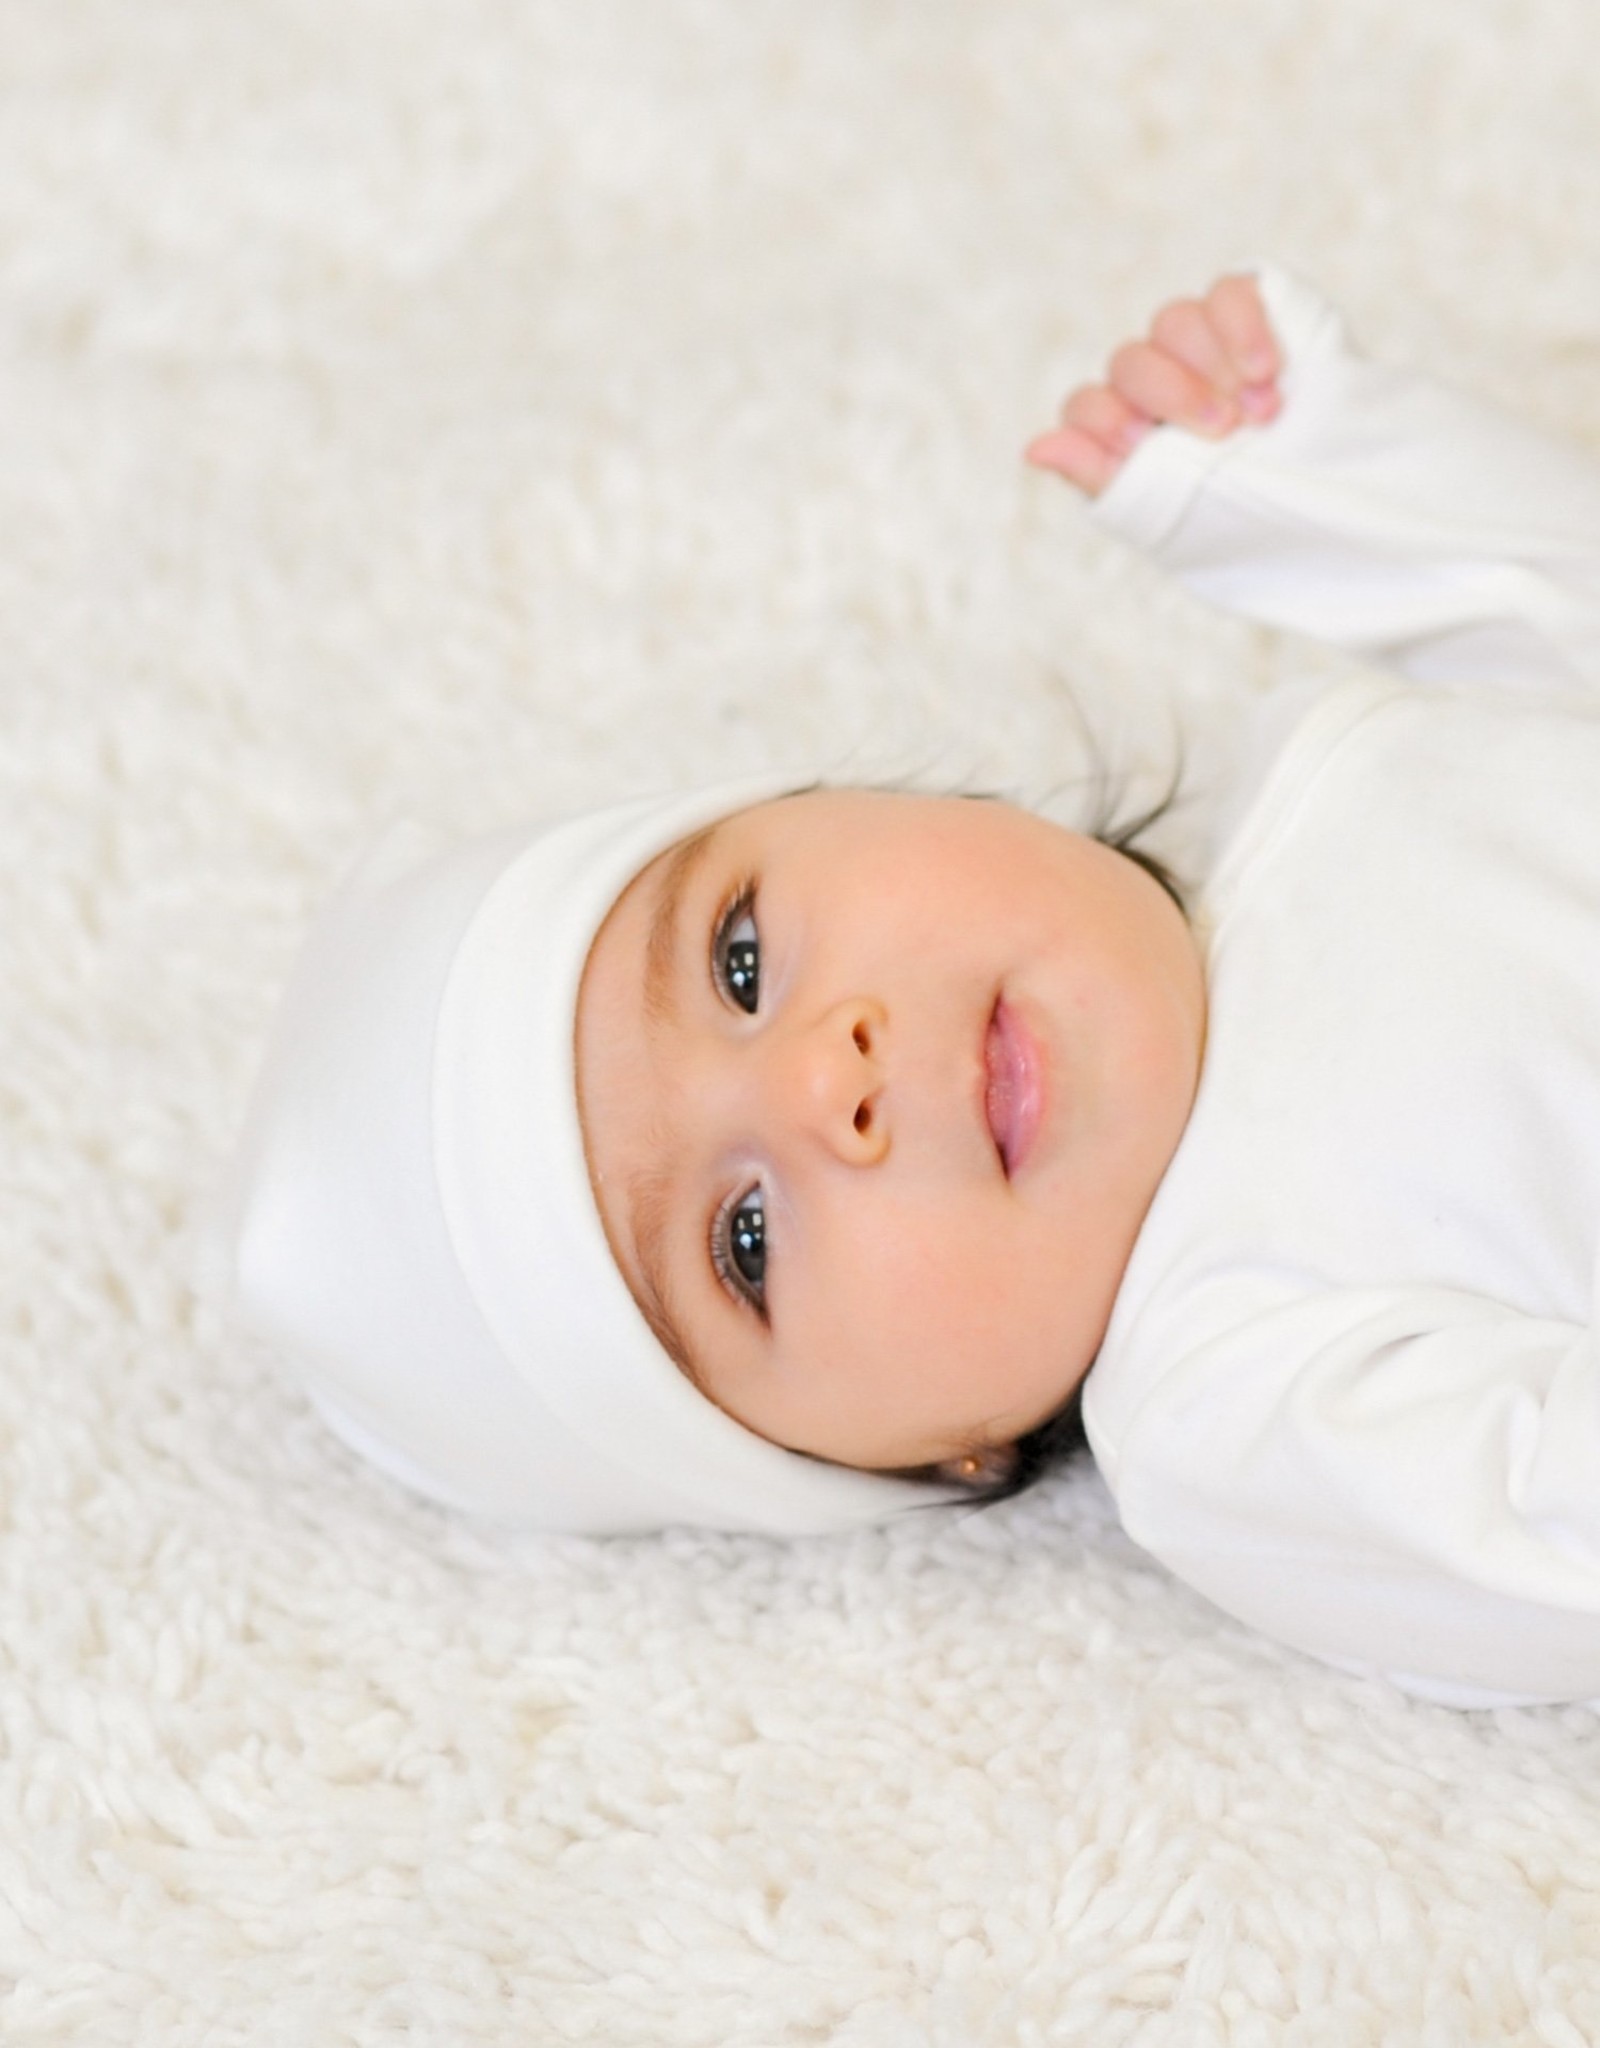 Beanie Cap White Newborn